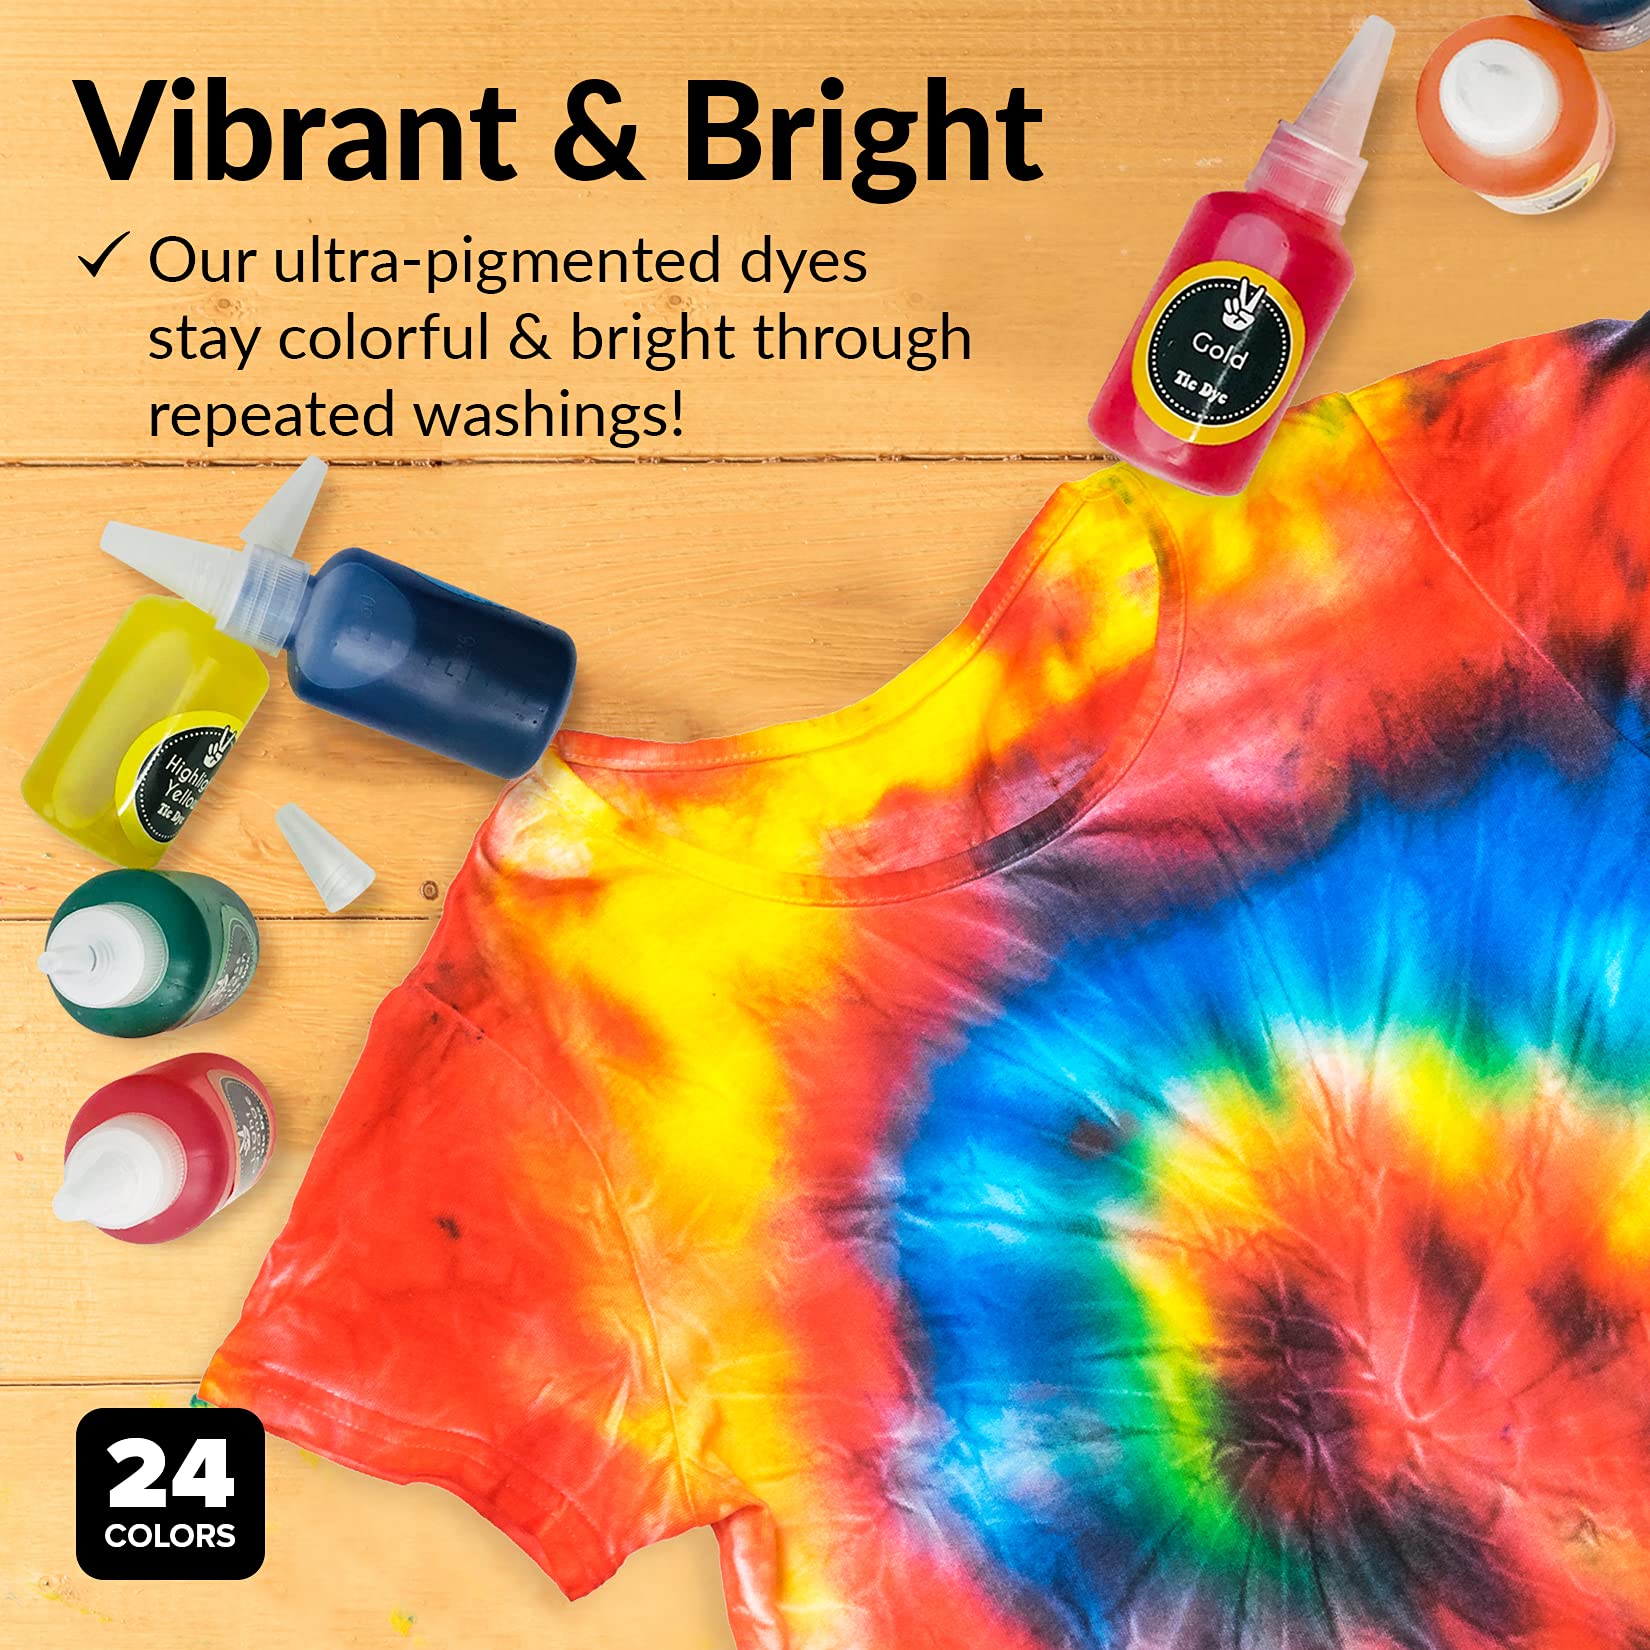 Premium Tie Dye Kit DIY Tie Dye Kits for Adults Fabric Shirt Clothes Decorating